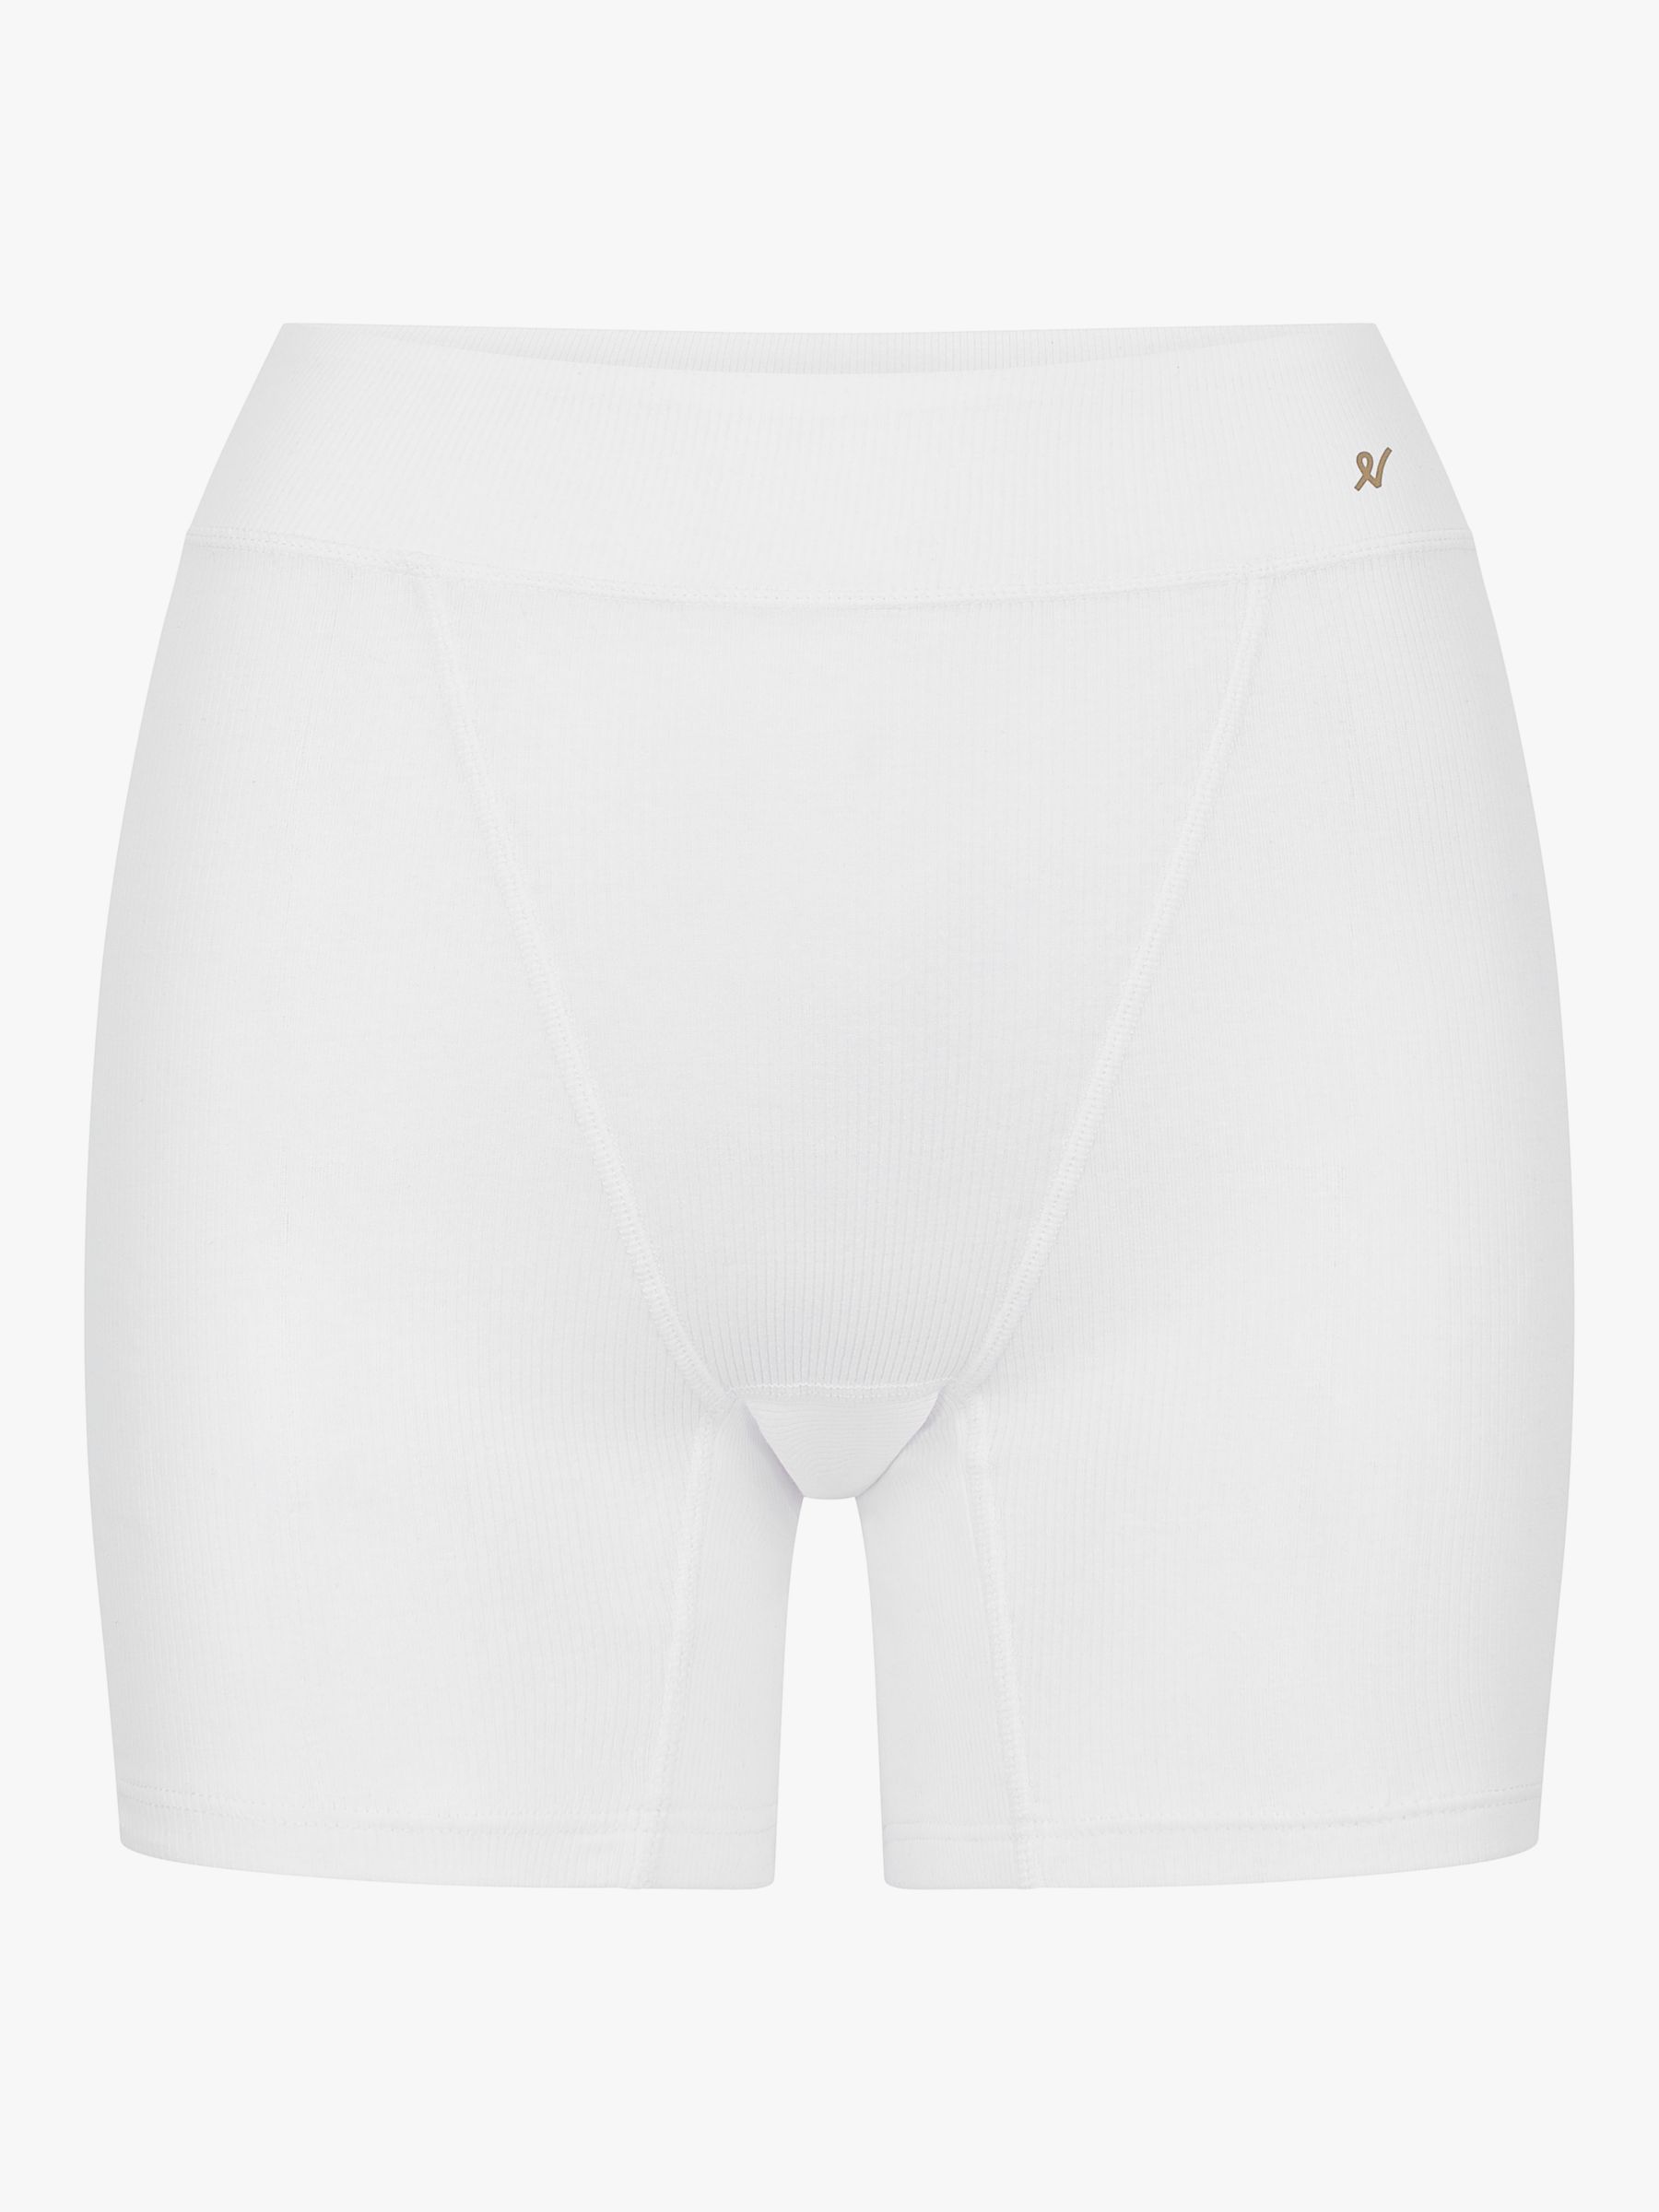 Nudea Organic Cotton Blend Boyfriend Boxer Shorts, White, XS